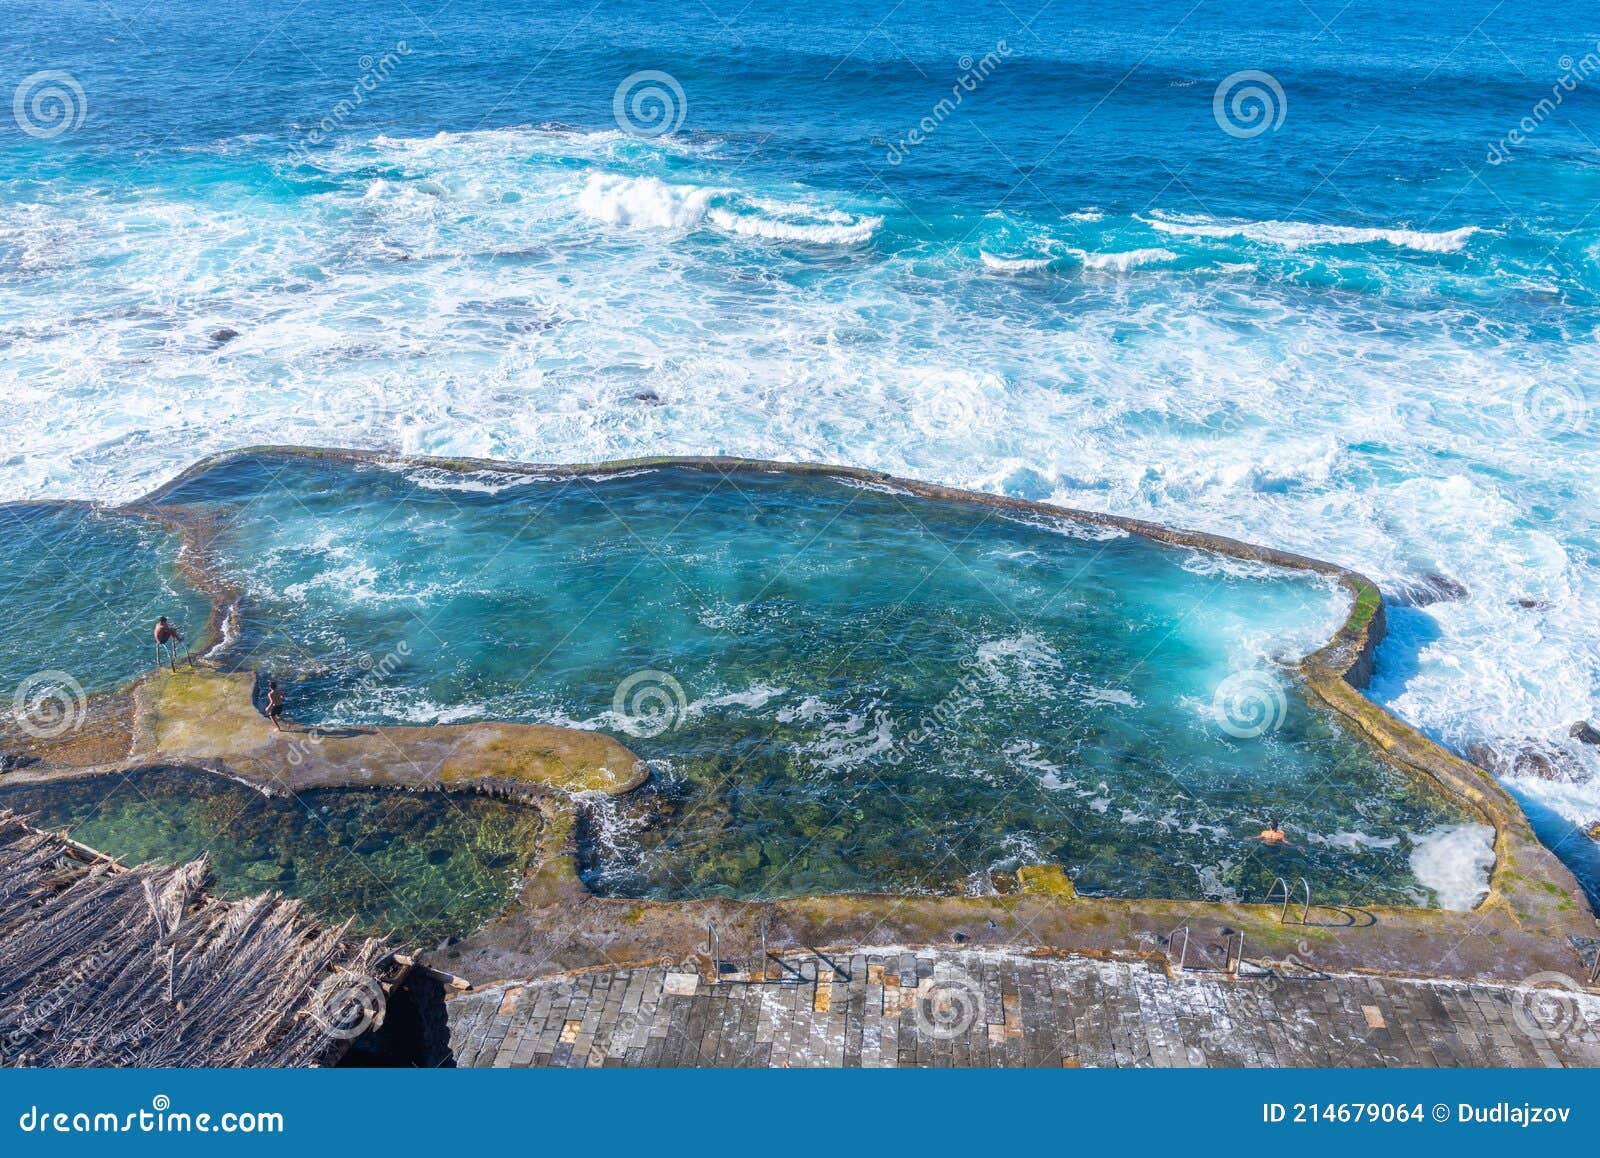 la maceta rock pool at el hierro island at canary islands, spain